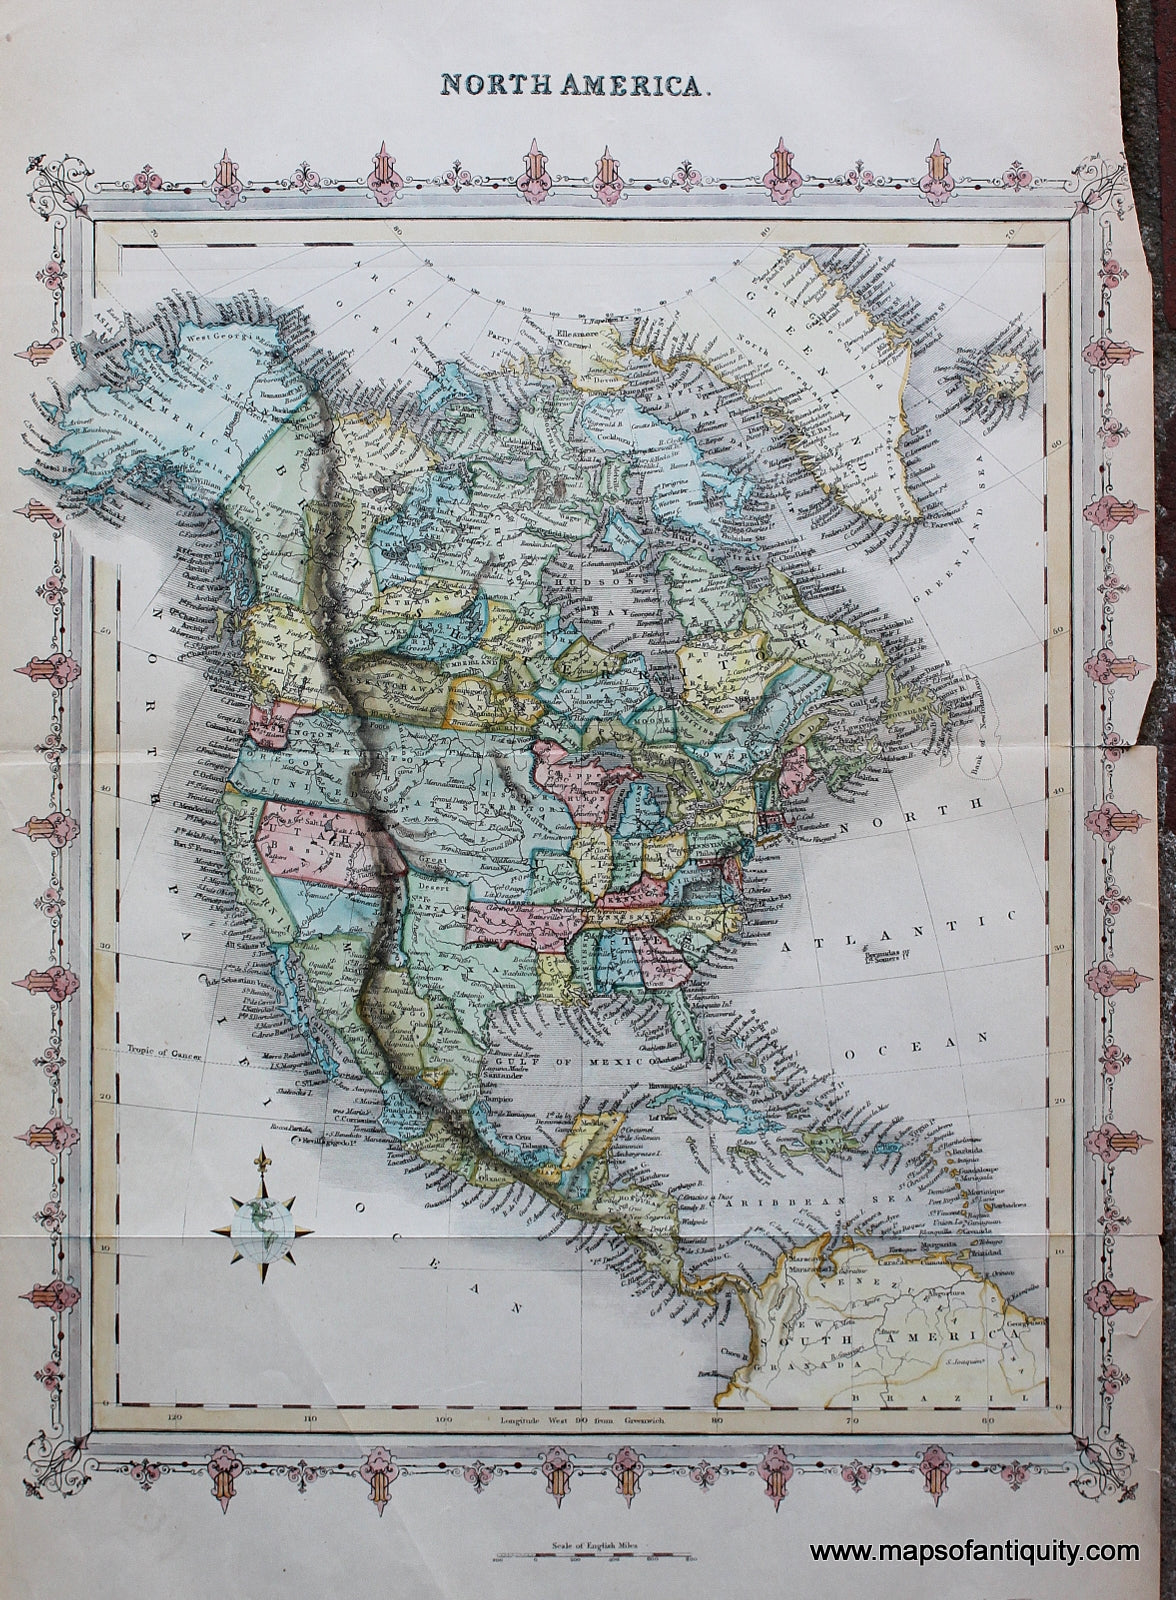 Antique-Hand-Colored-Map-North-America.**********-North-America-North-America-General-1845-Tallis-Maps-Of-Antiquity